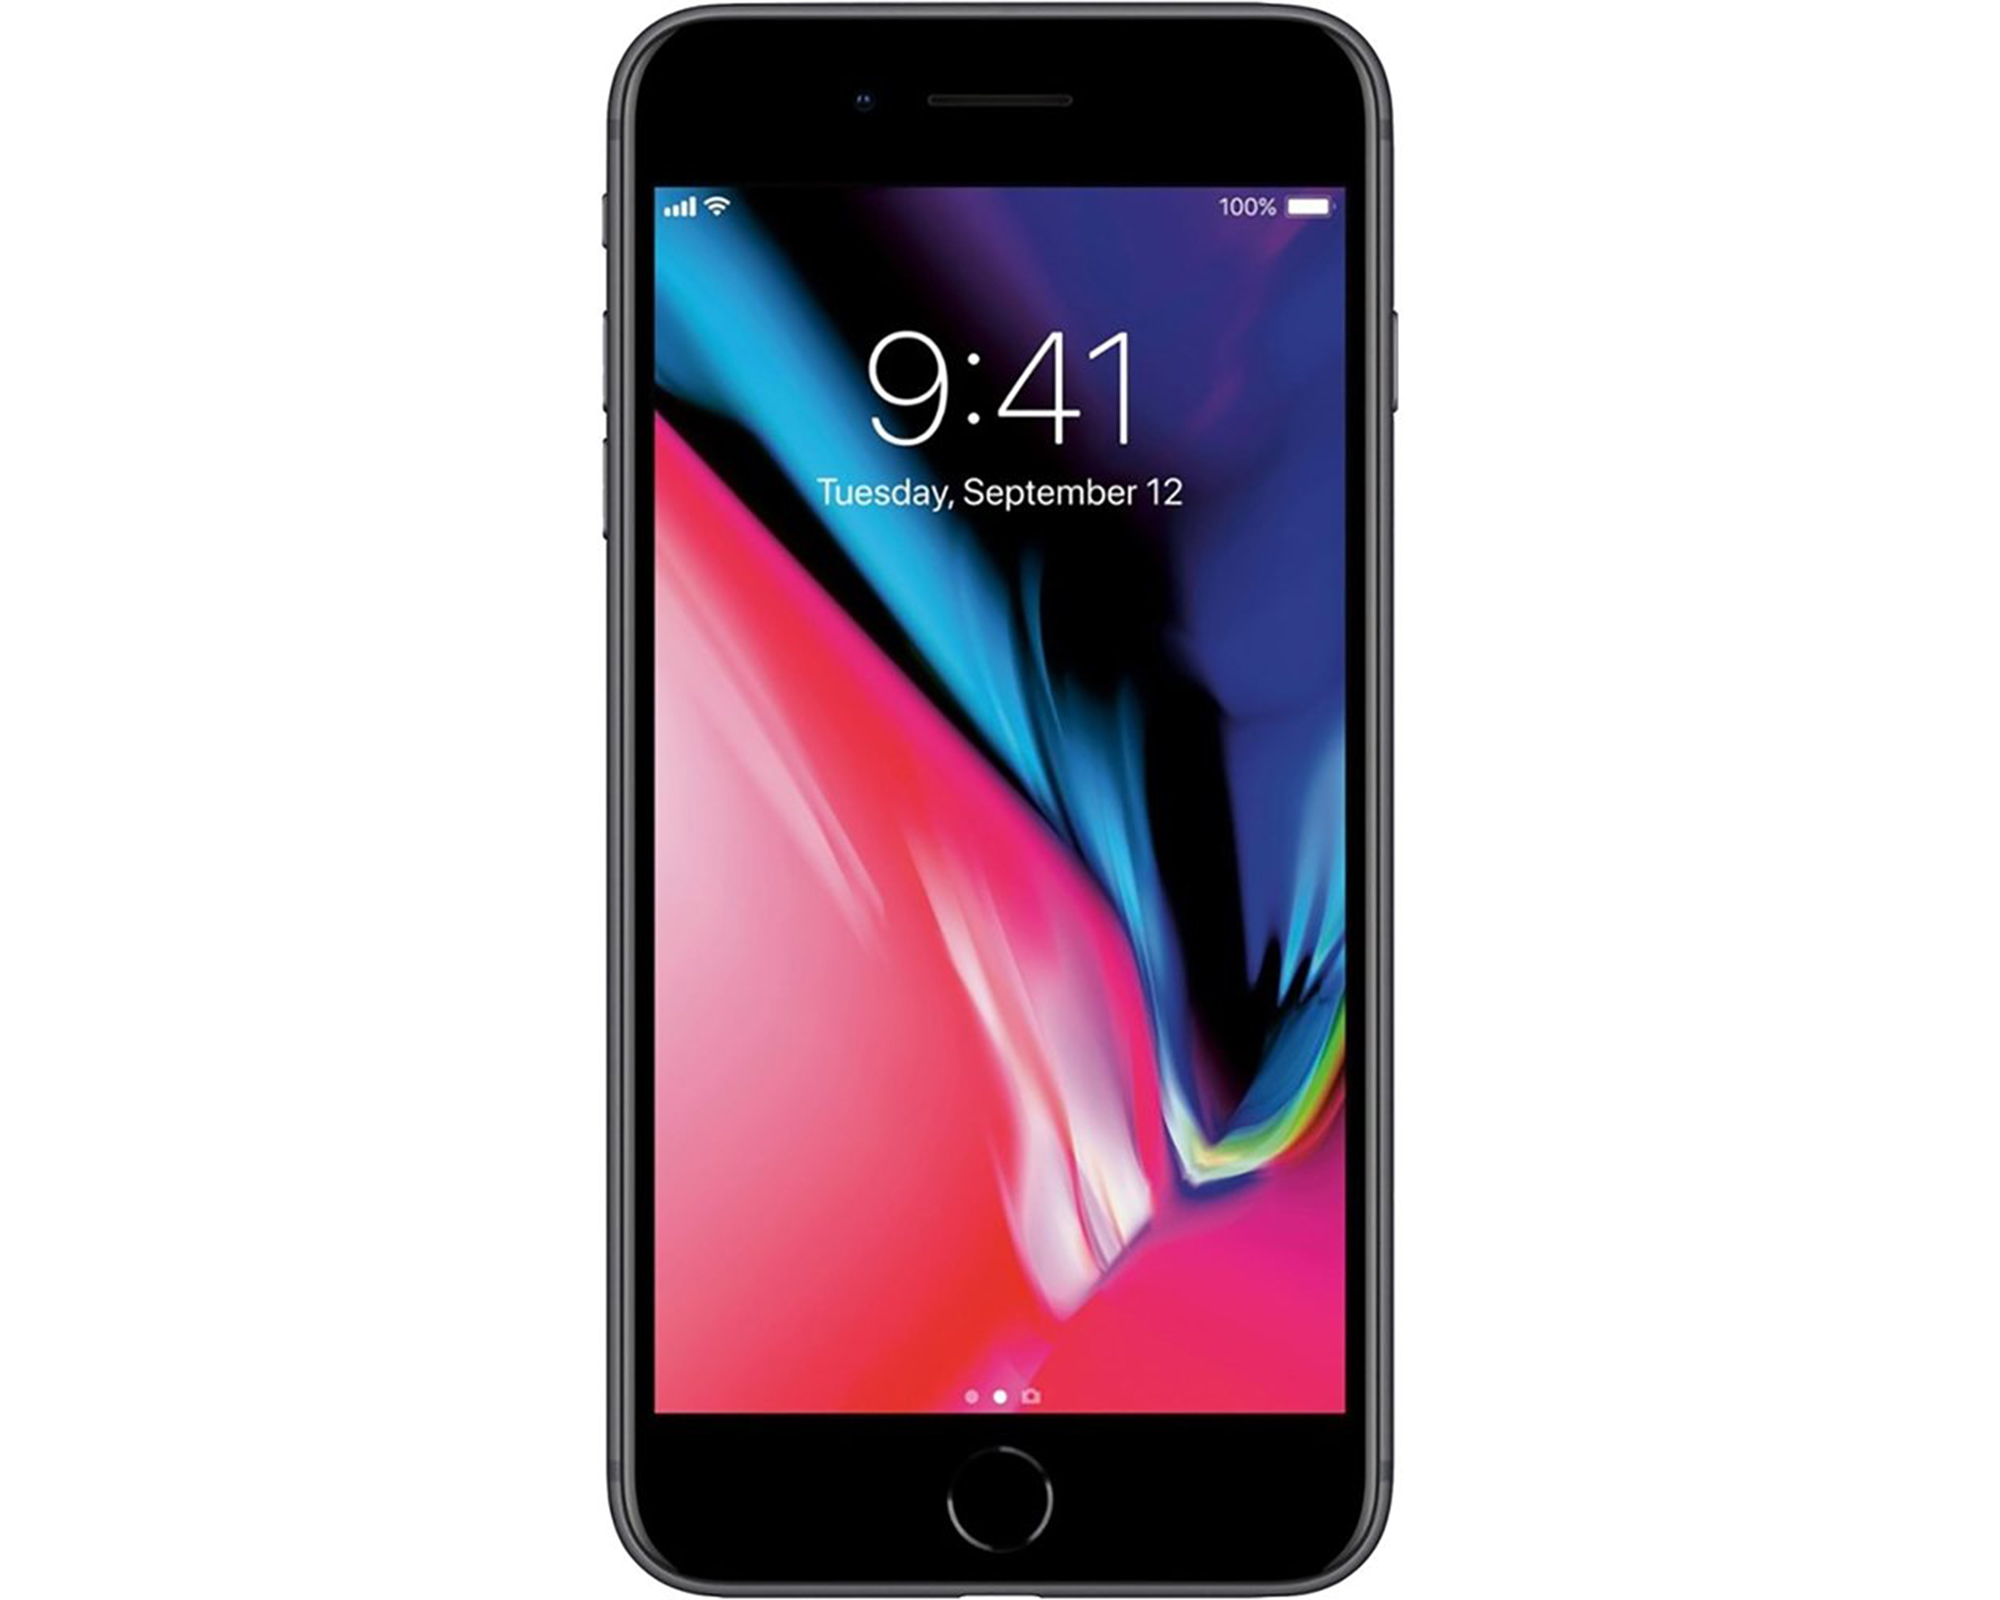 Restored Apple iPhone 8 Plus 64GB, Space Gray - Unlocked GSM (Refurbished) - image 1 of 5